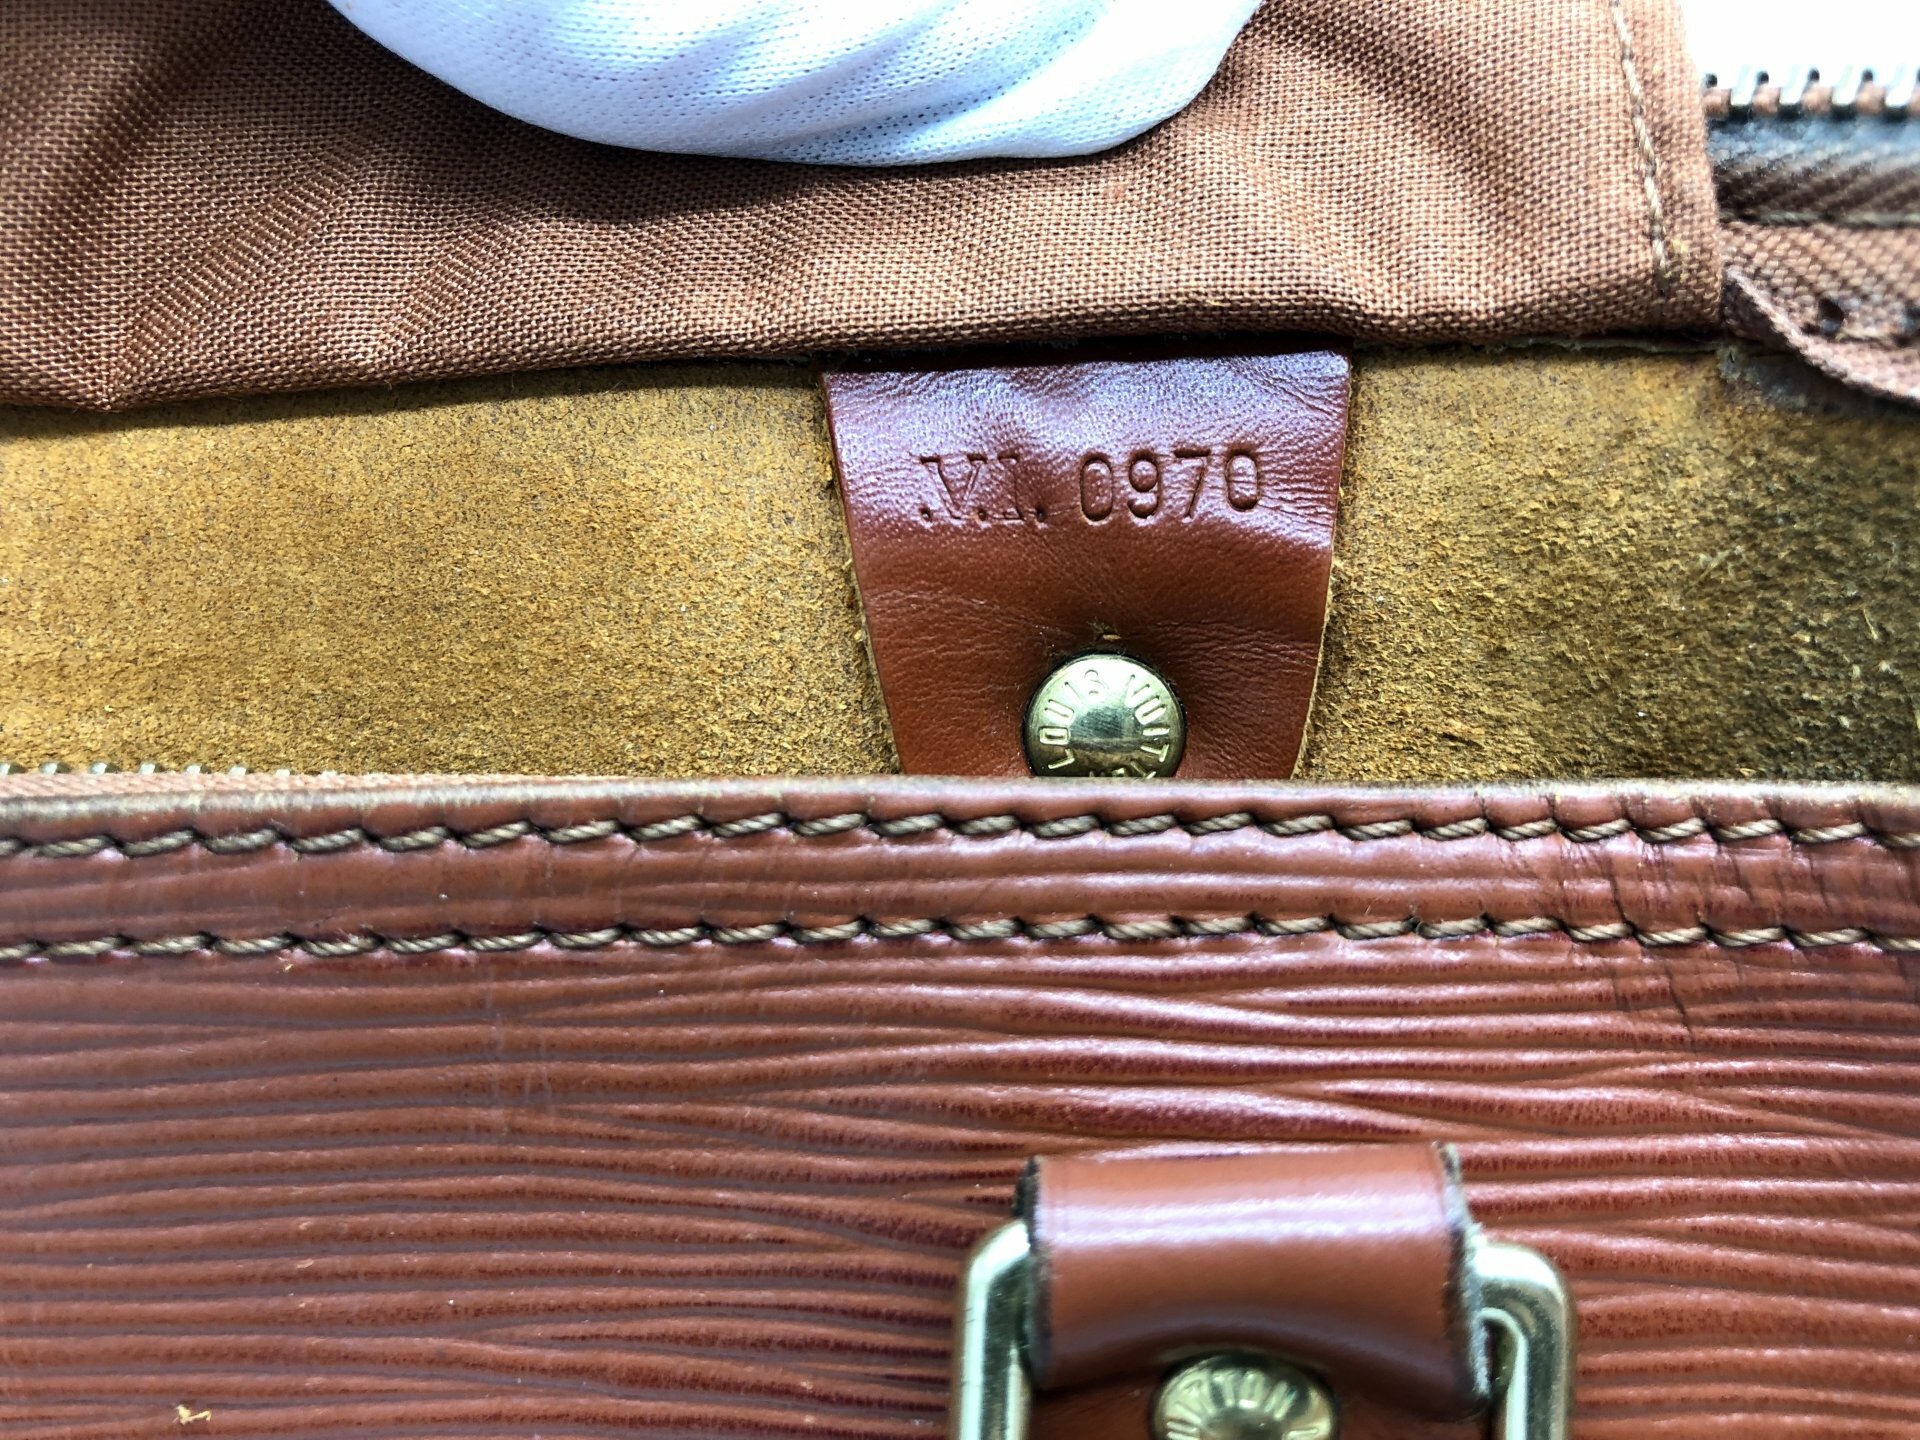 Speedy leather handbag Louis Vuitton Brown in Leather - 16327221